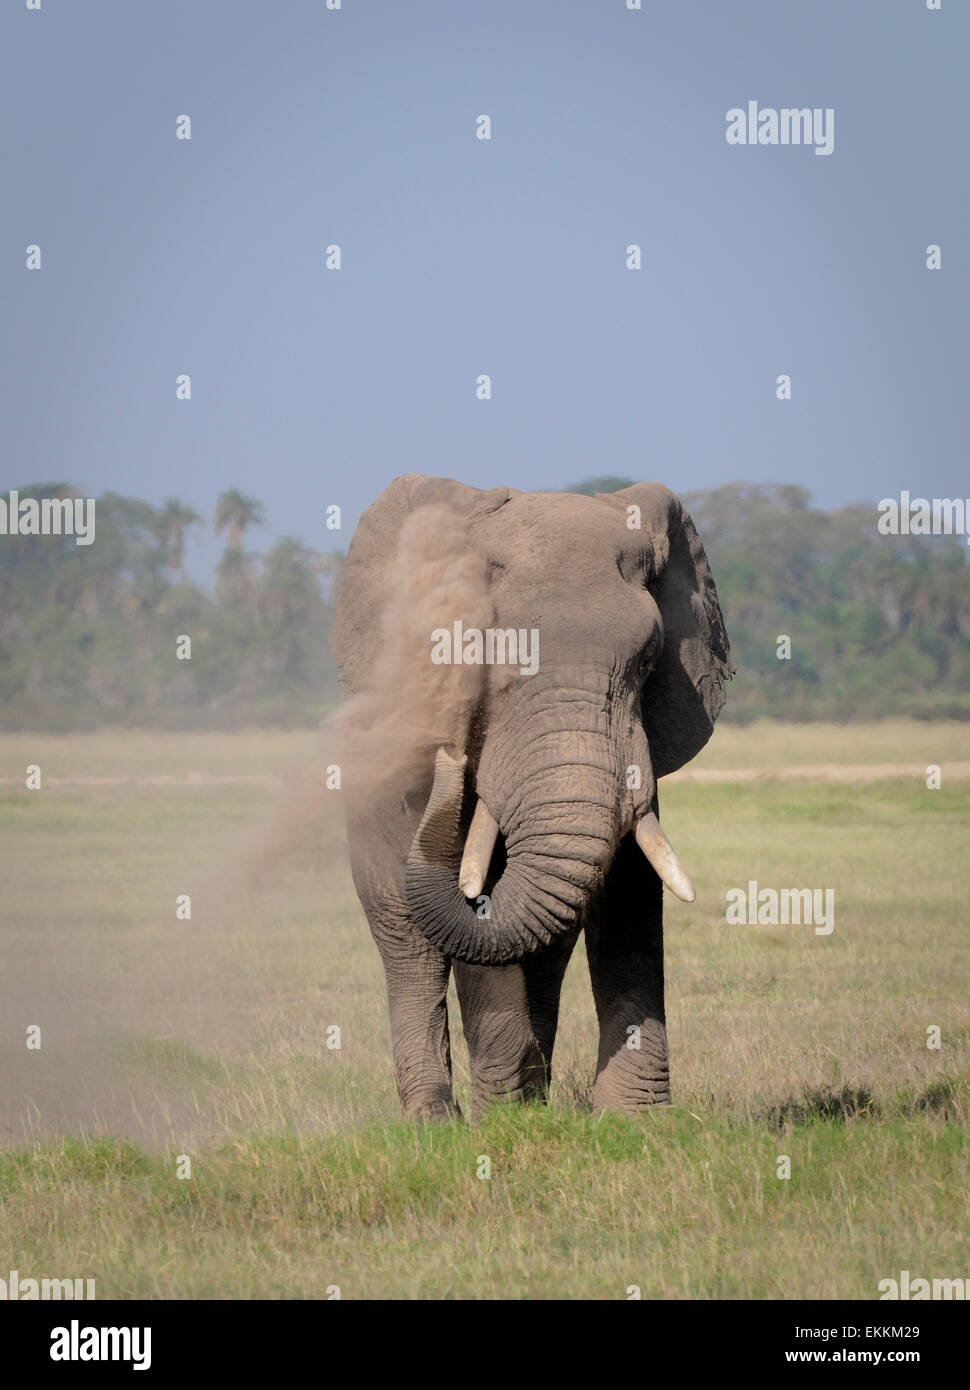 African elephant dusting Stock Photo